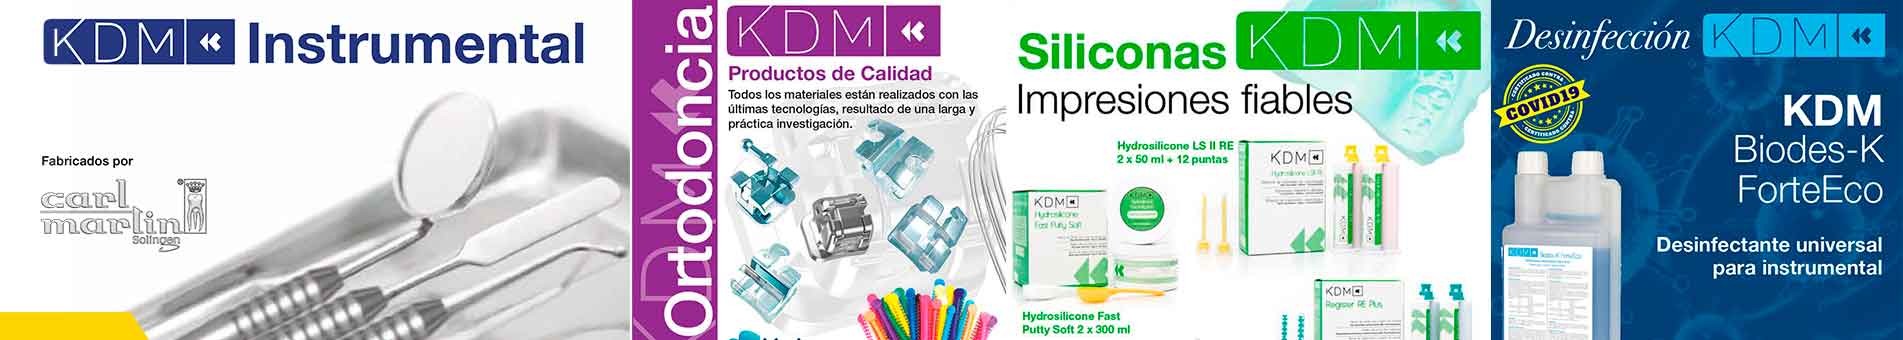 Materiales e insumos odontología KDM